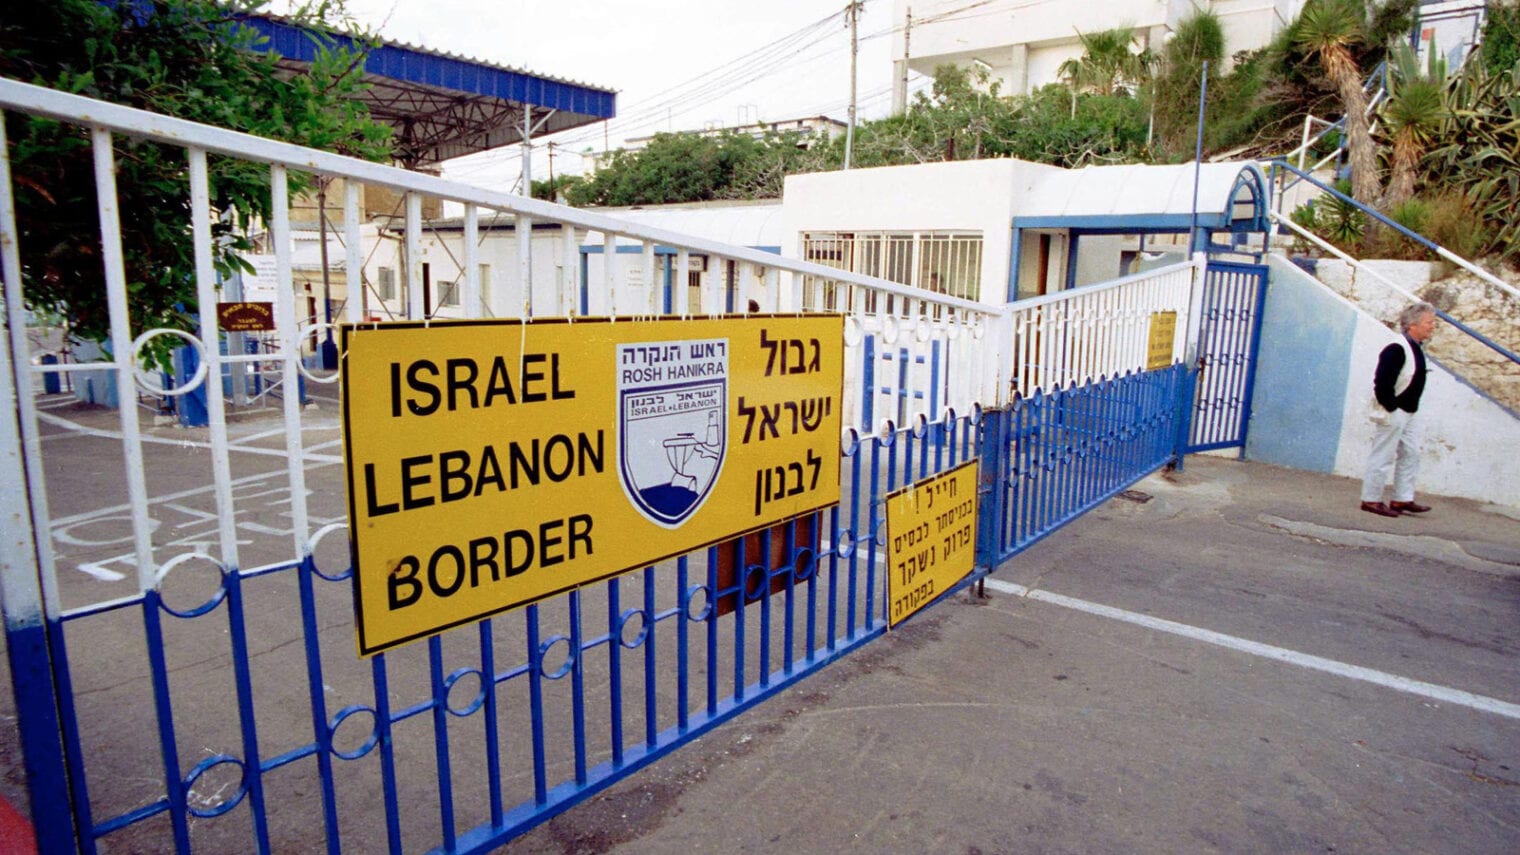 The Israeli-Lebanon border along the coastal road. Photo by Northfoto via Shutterstock.com